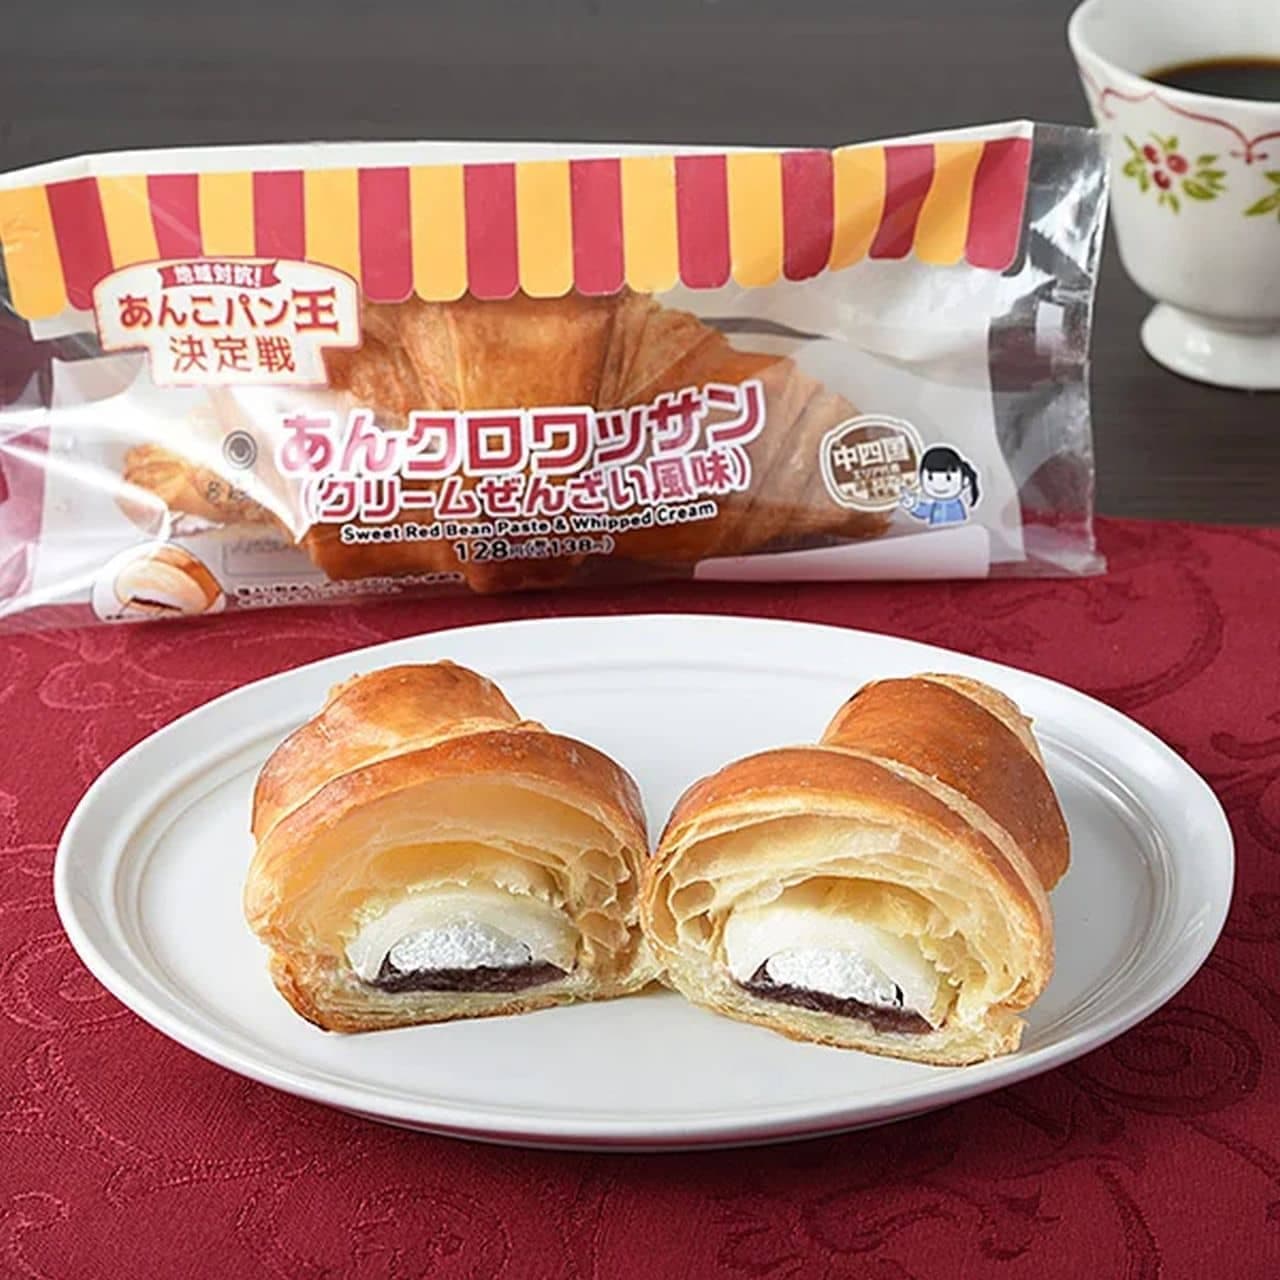 FamilyMart "An Croissant (Cream Zenzai Flavor)